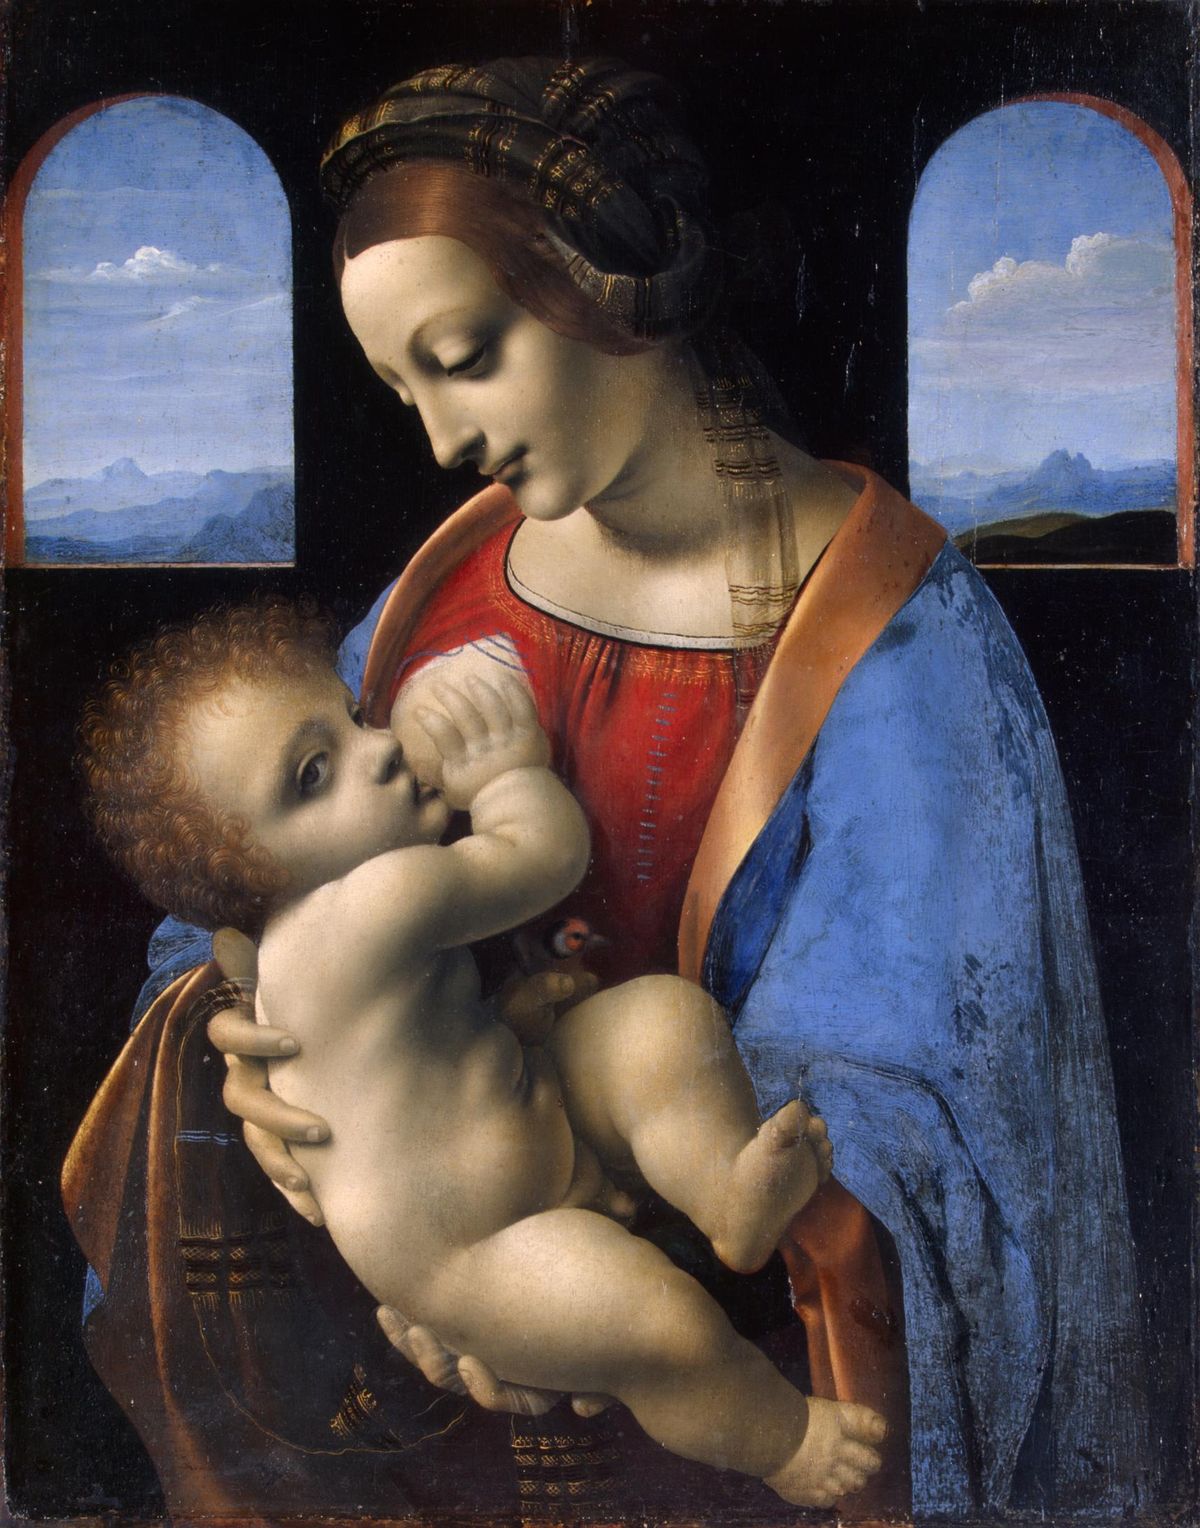 Leonardo da Vinci’s Madonna Litta (1490) in the State Hermitage Museum will be turned into an NFT 